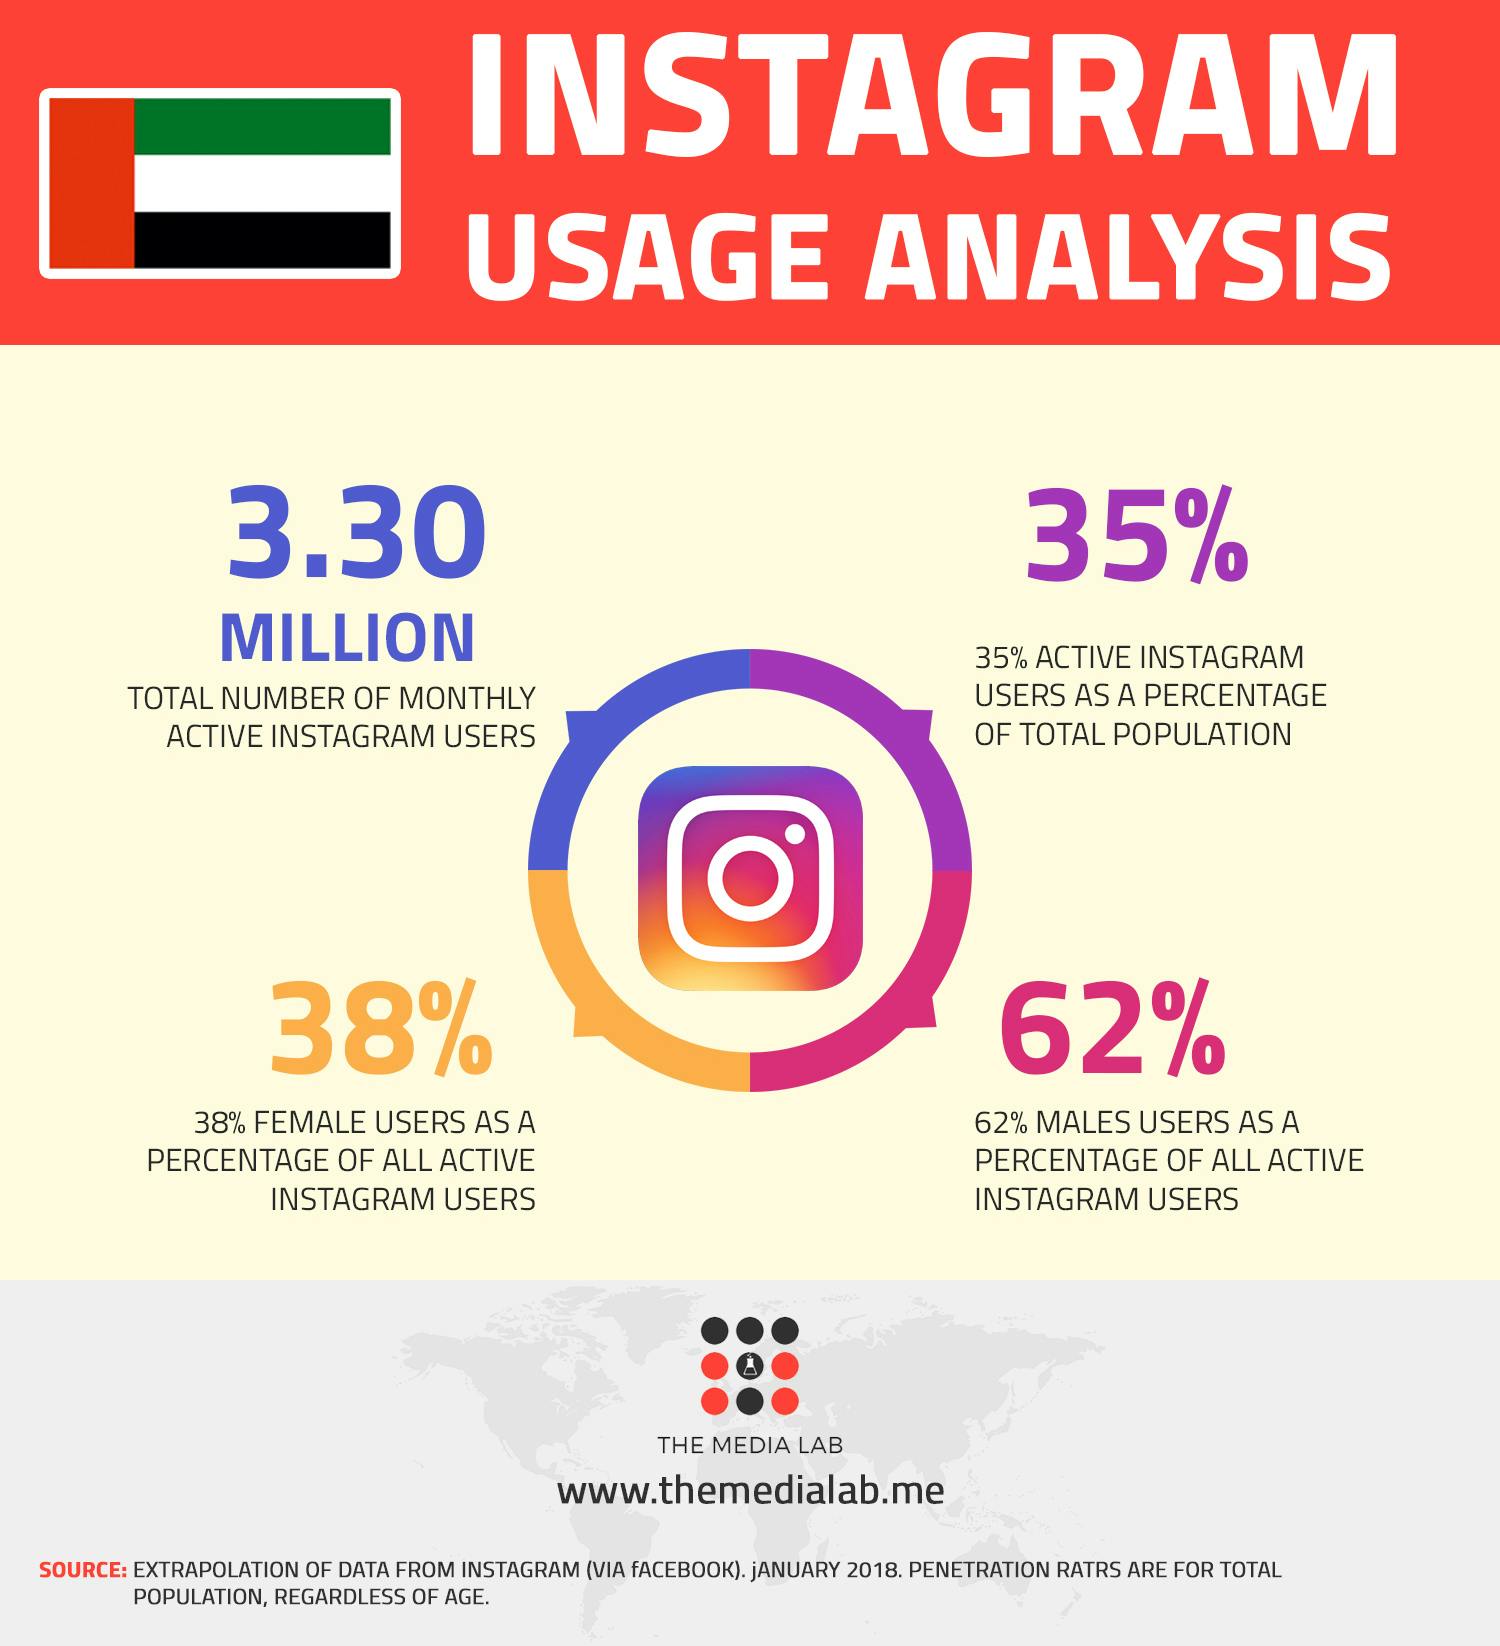 Instagram usage analysis in UAE 2018